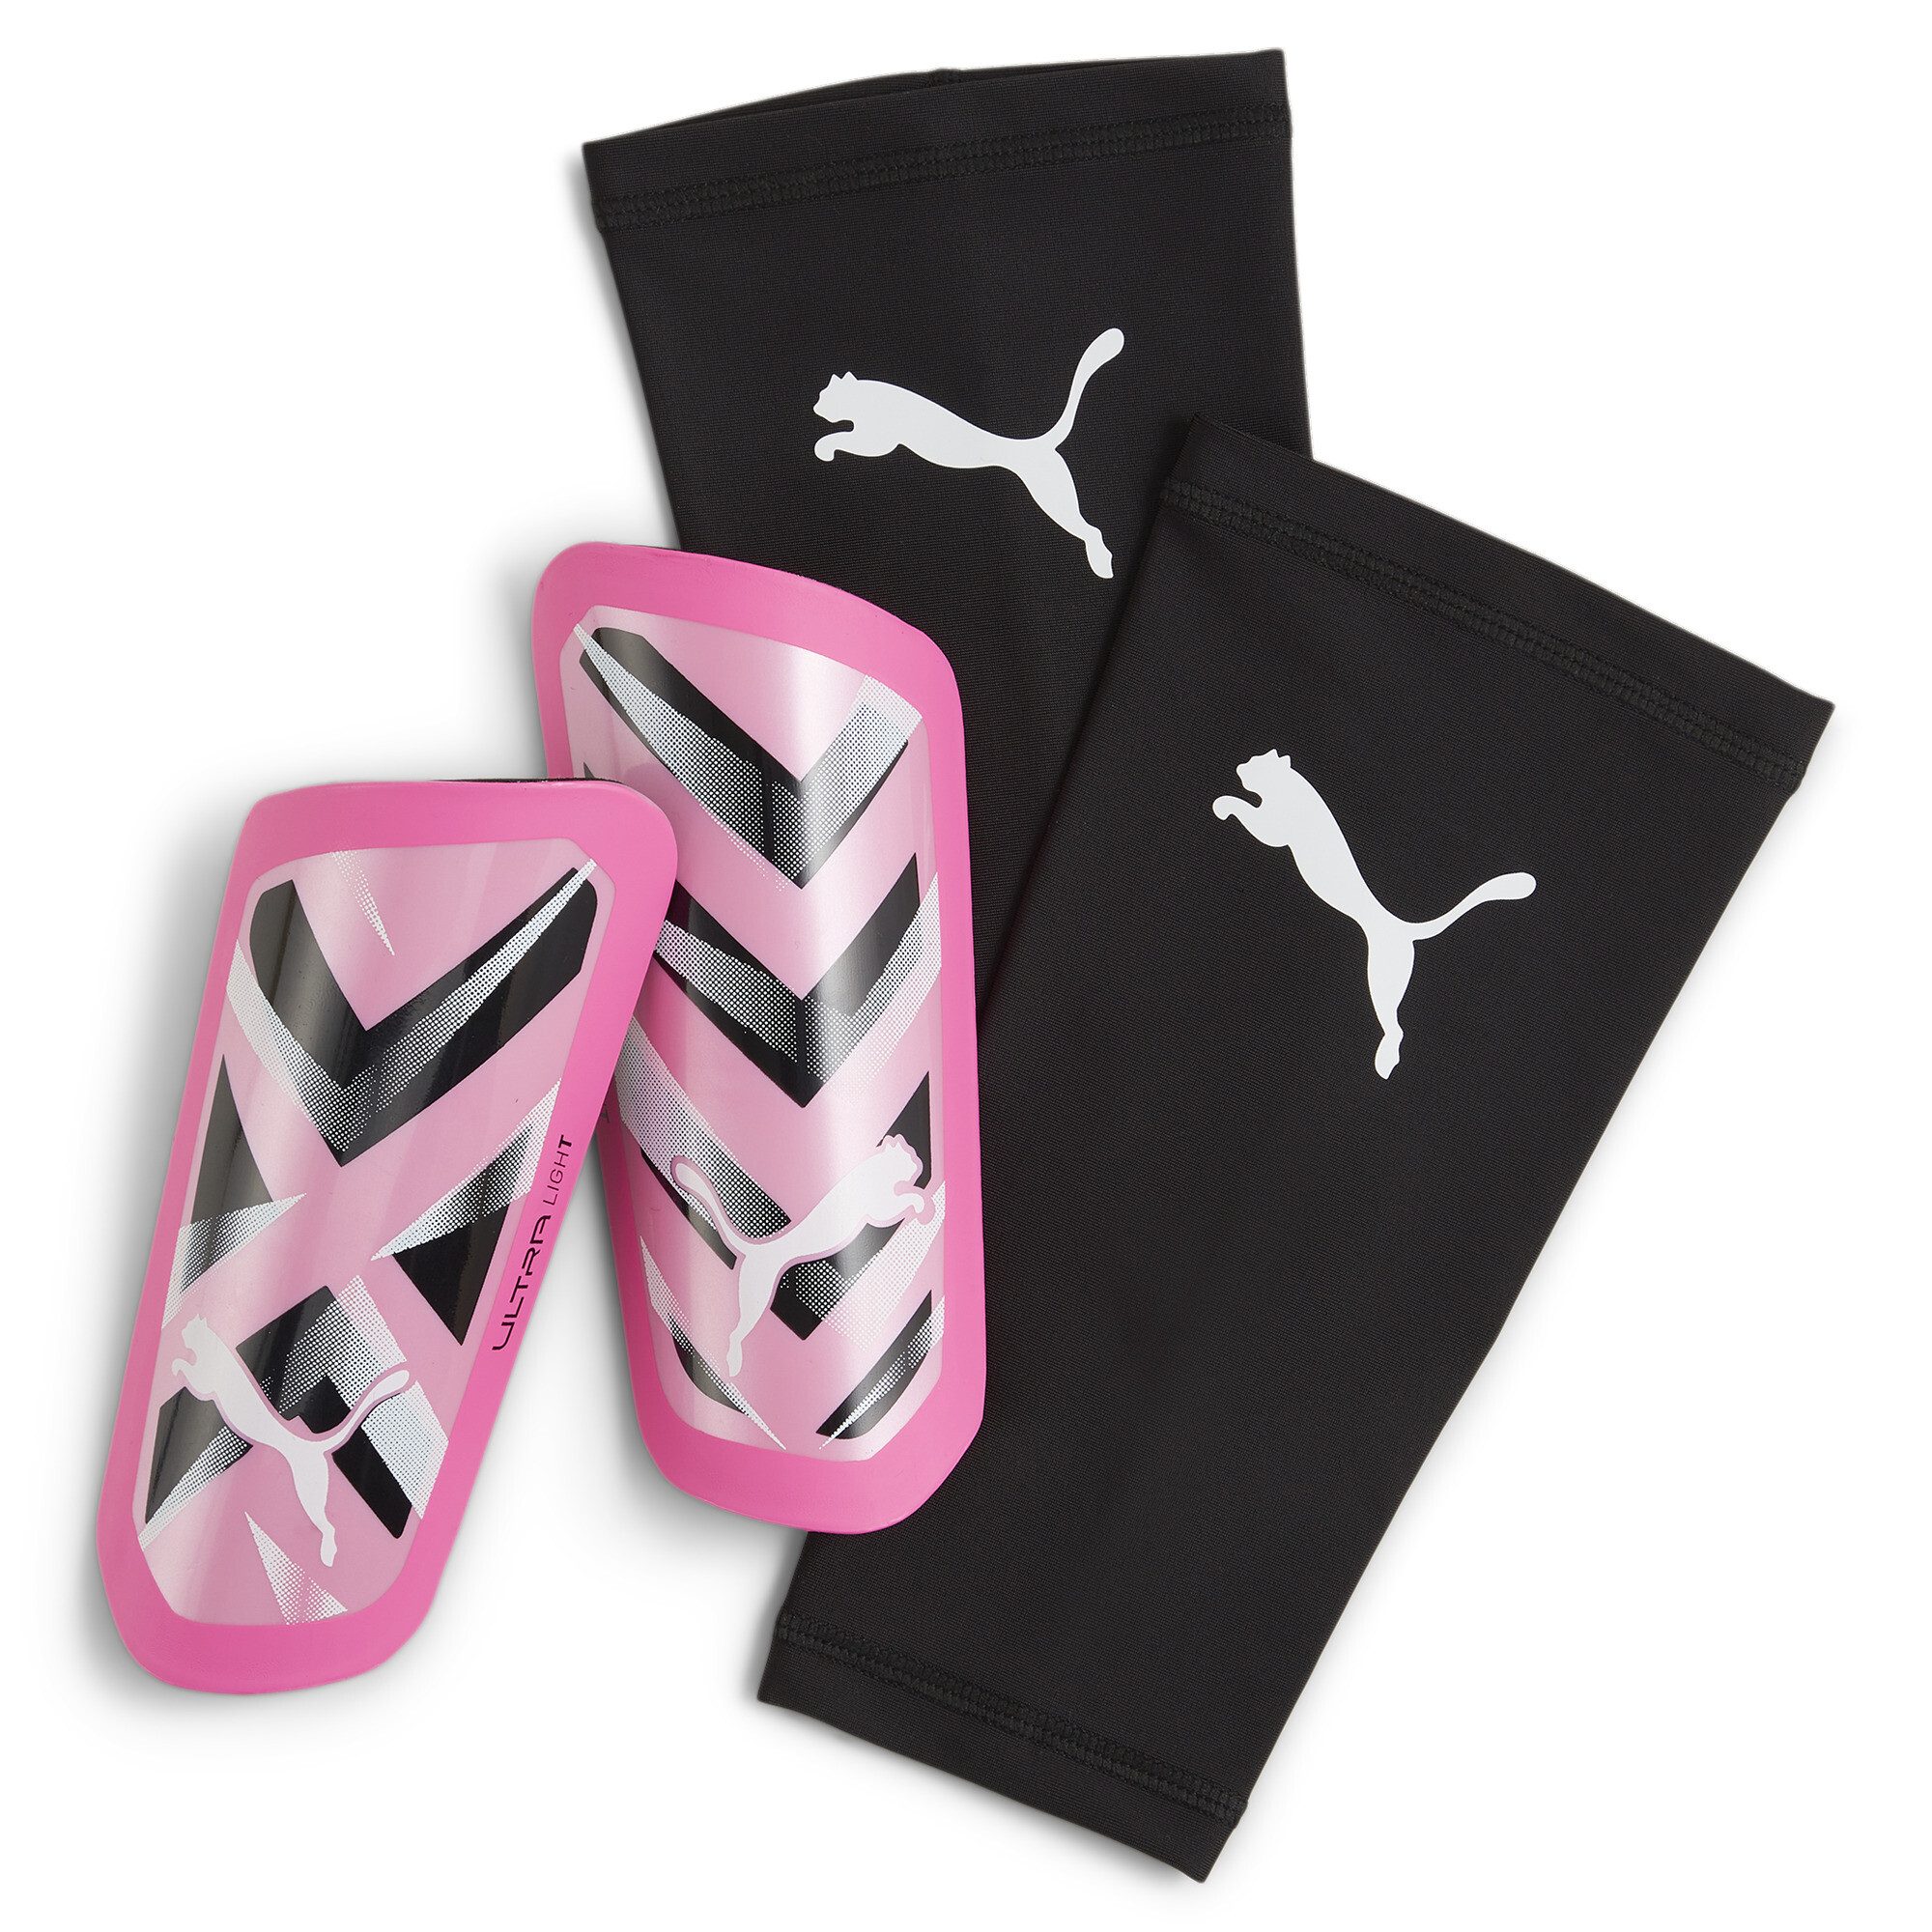 Puma ULTRA Light Sleeve Football Shin Guards, Pink, Size XS, Accessories